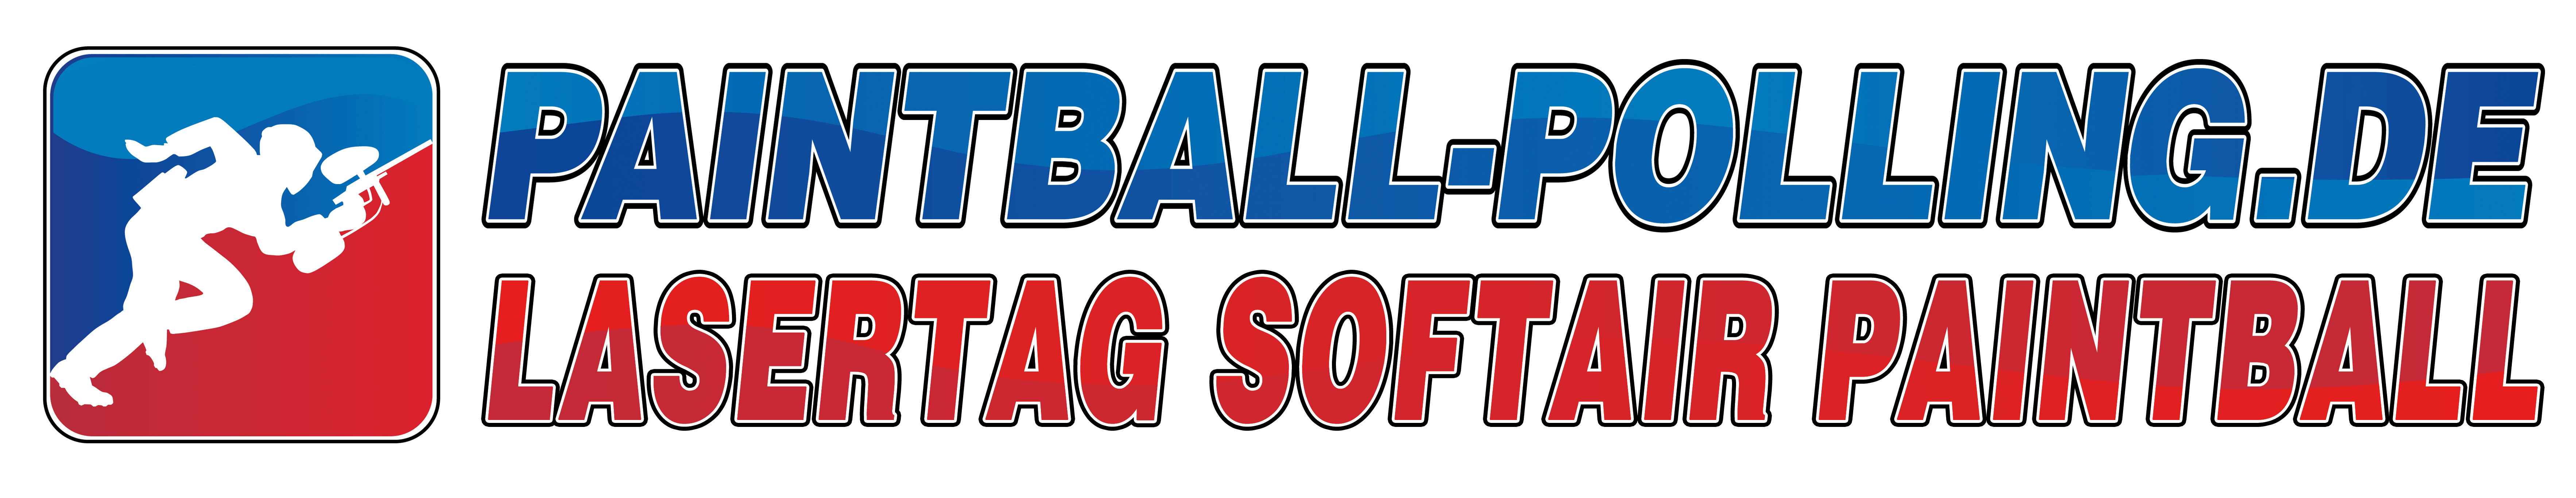 Paintball Polling Logo